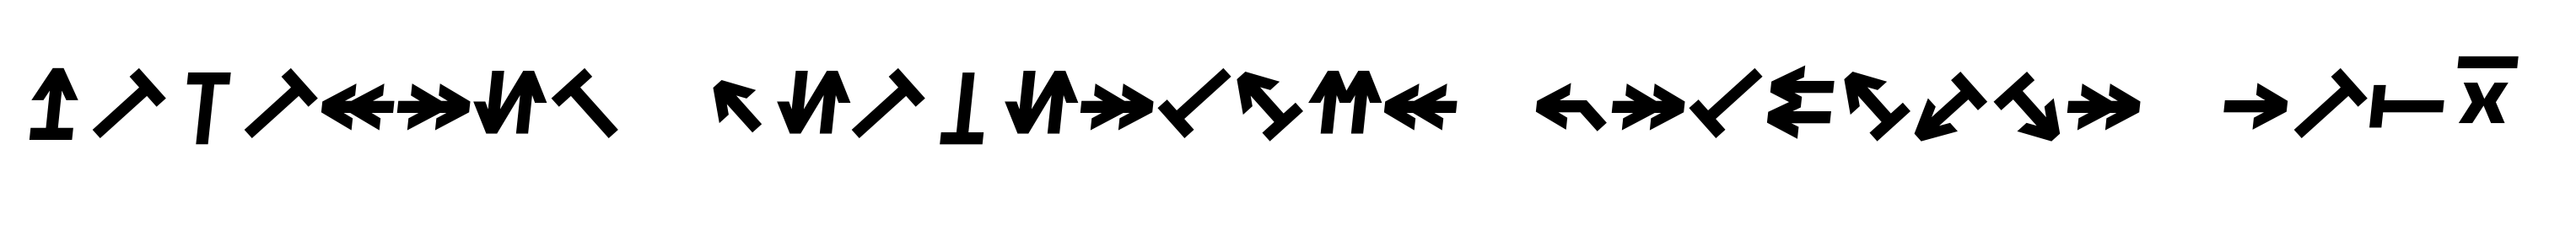 Monostep Geometrics Straight Bold Italic